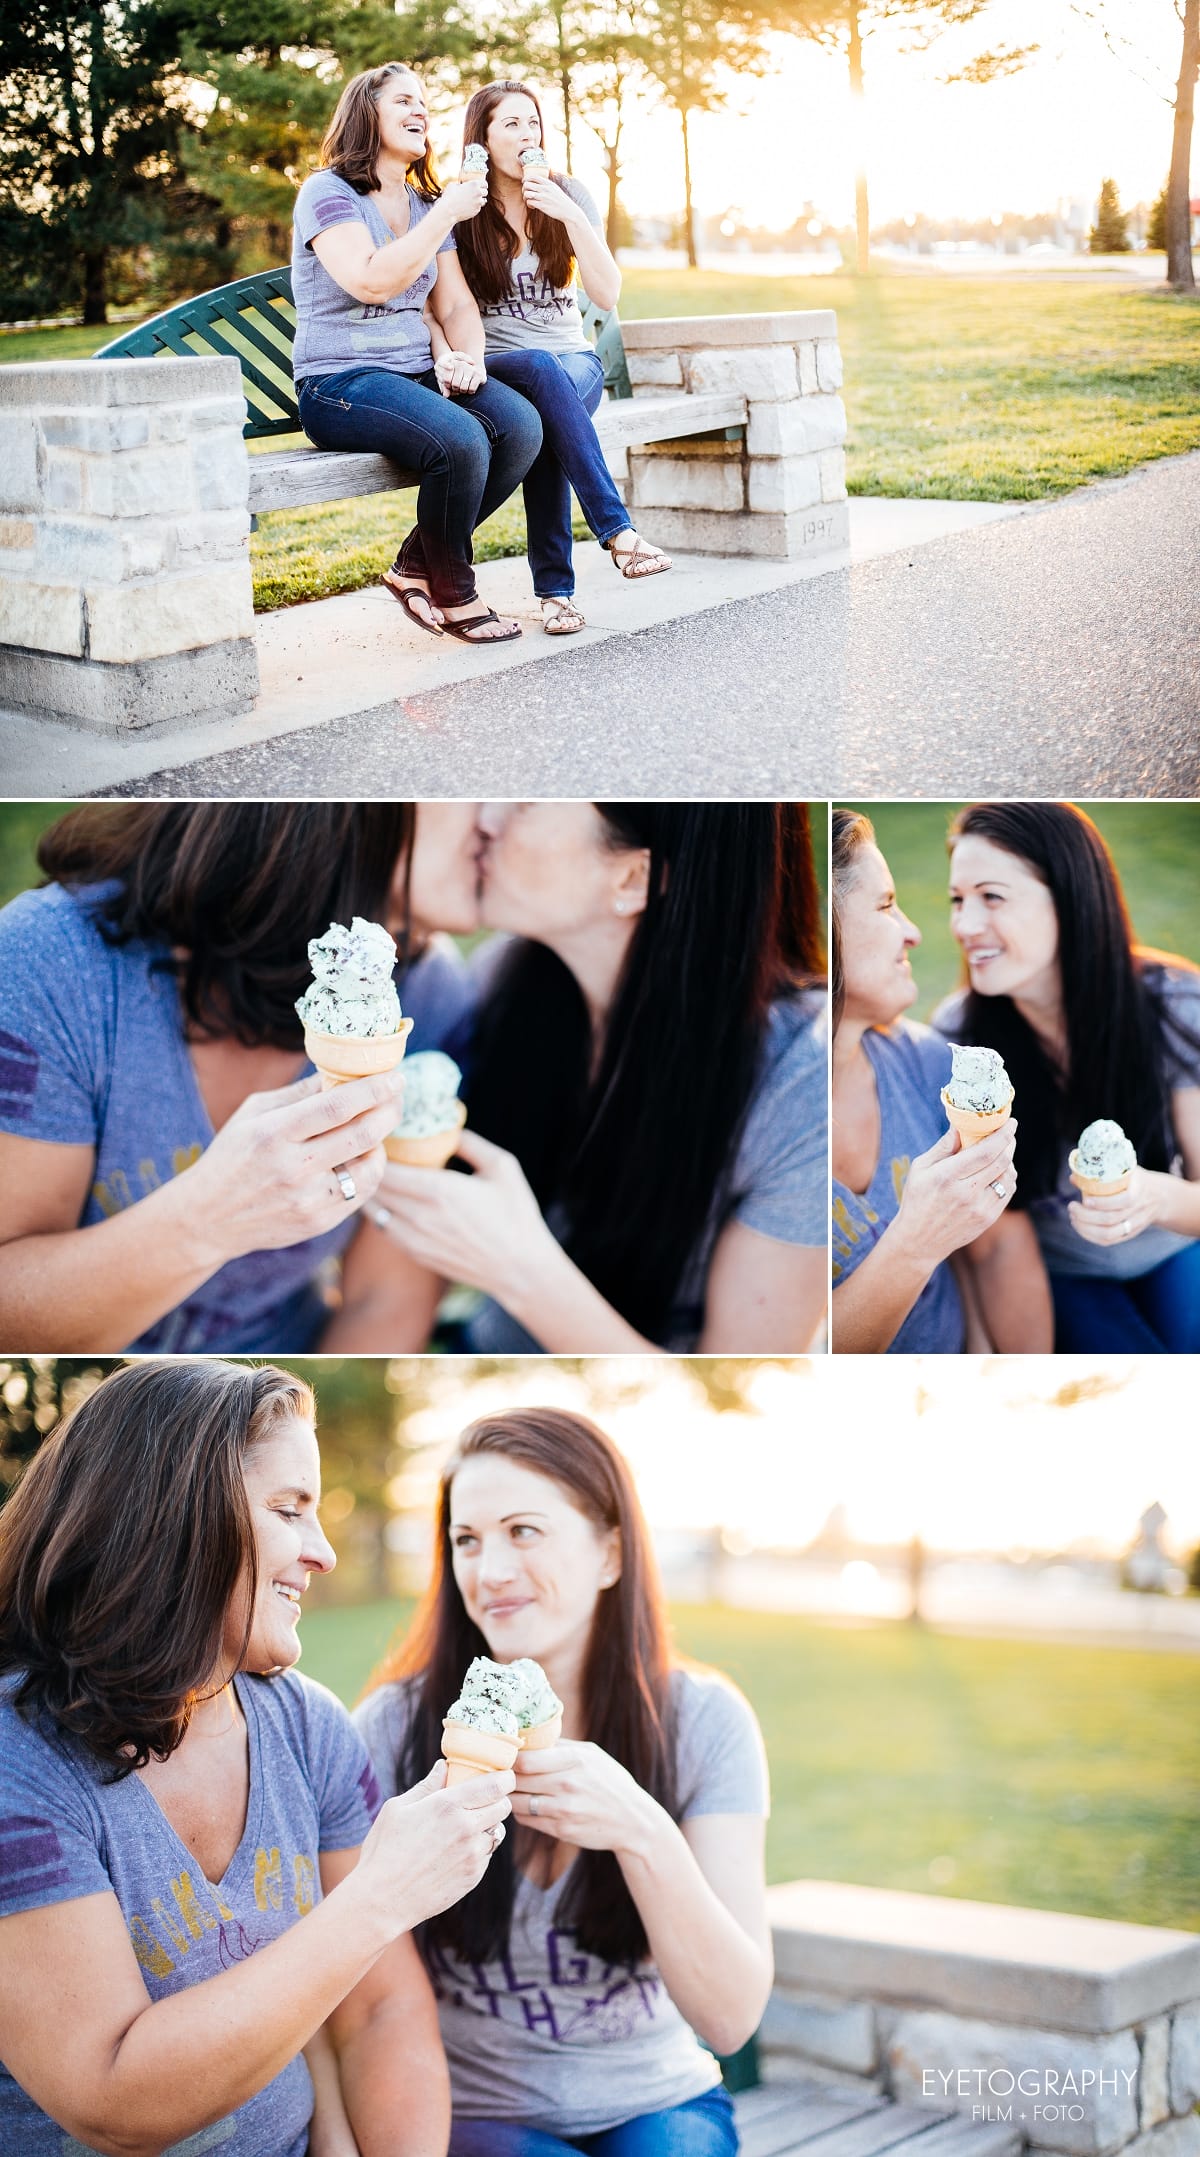 Gina and Beth 8 - Minnehaha Falls Engagement Photography